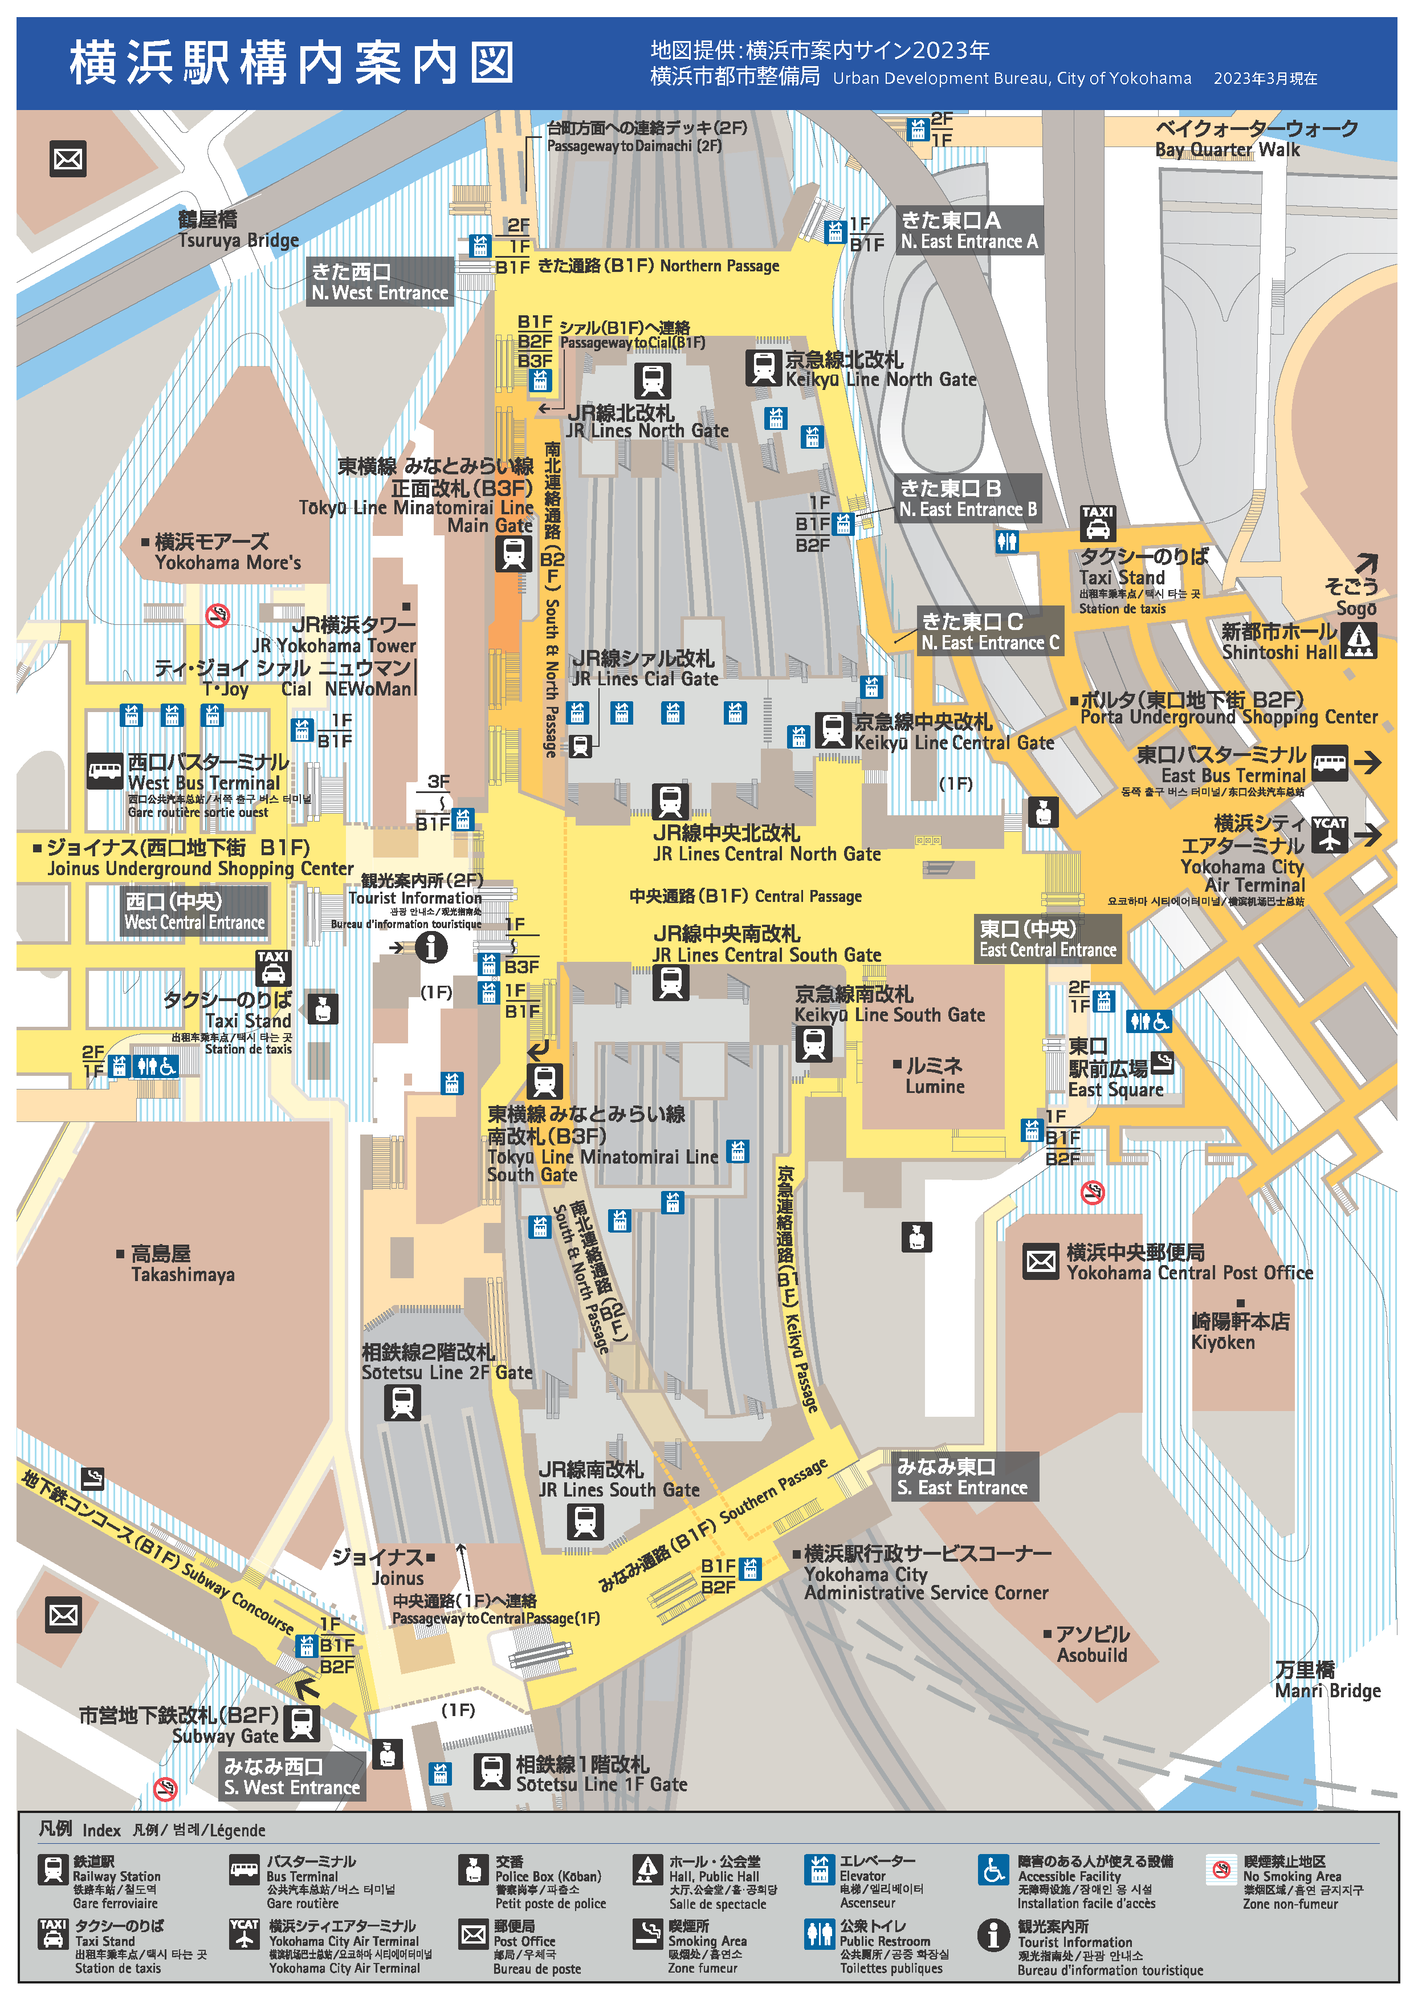 Yokohama Station premises Guide Map as of March 2023